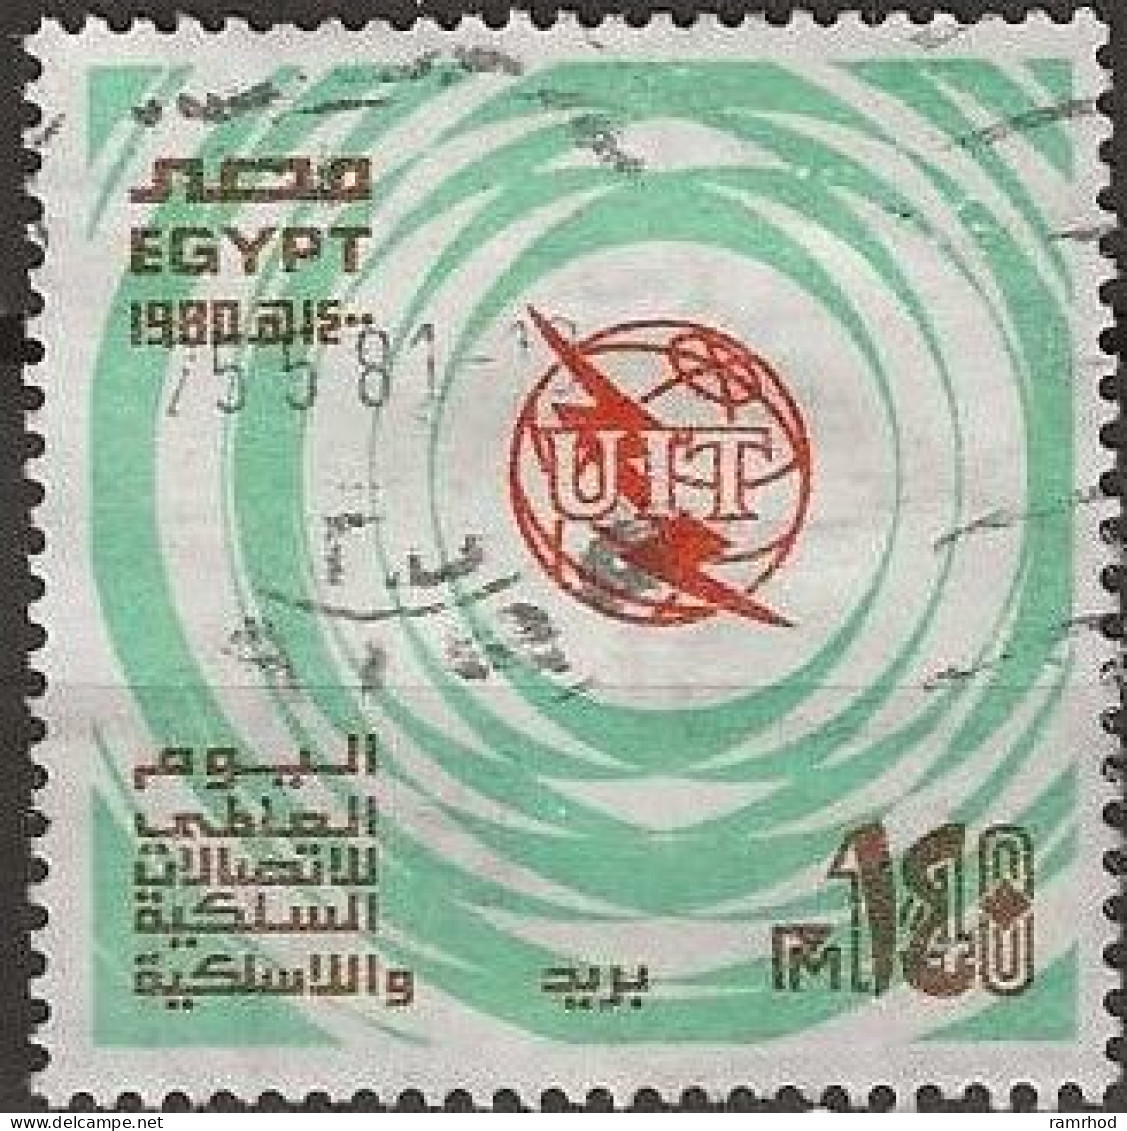 EGYPT 1980 United Nations Day - 140m. ITU Emblem (International Tele-communications Day) FU - Oblitérés